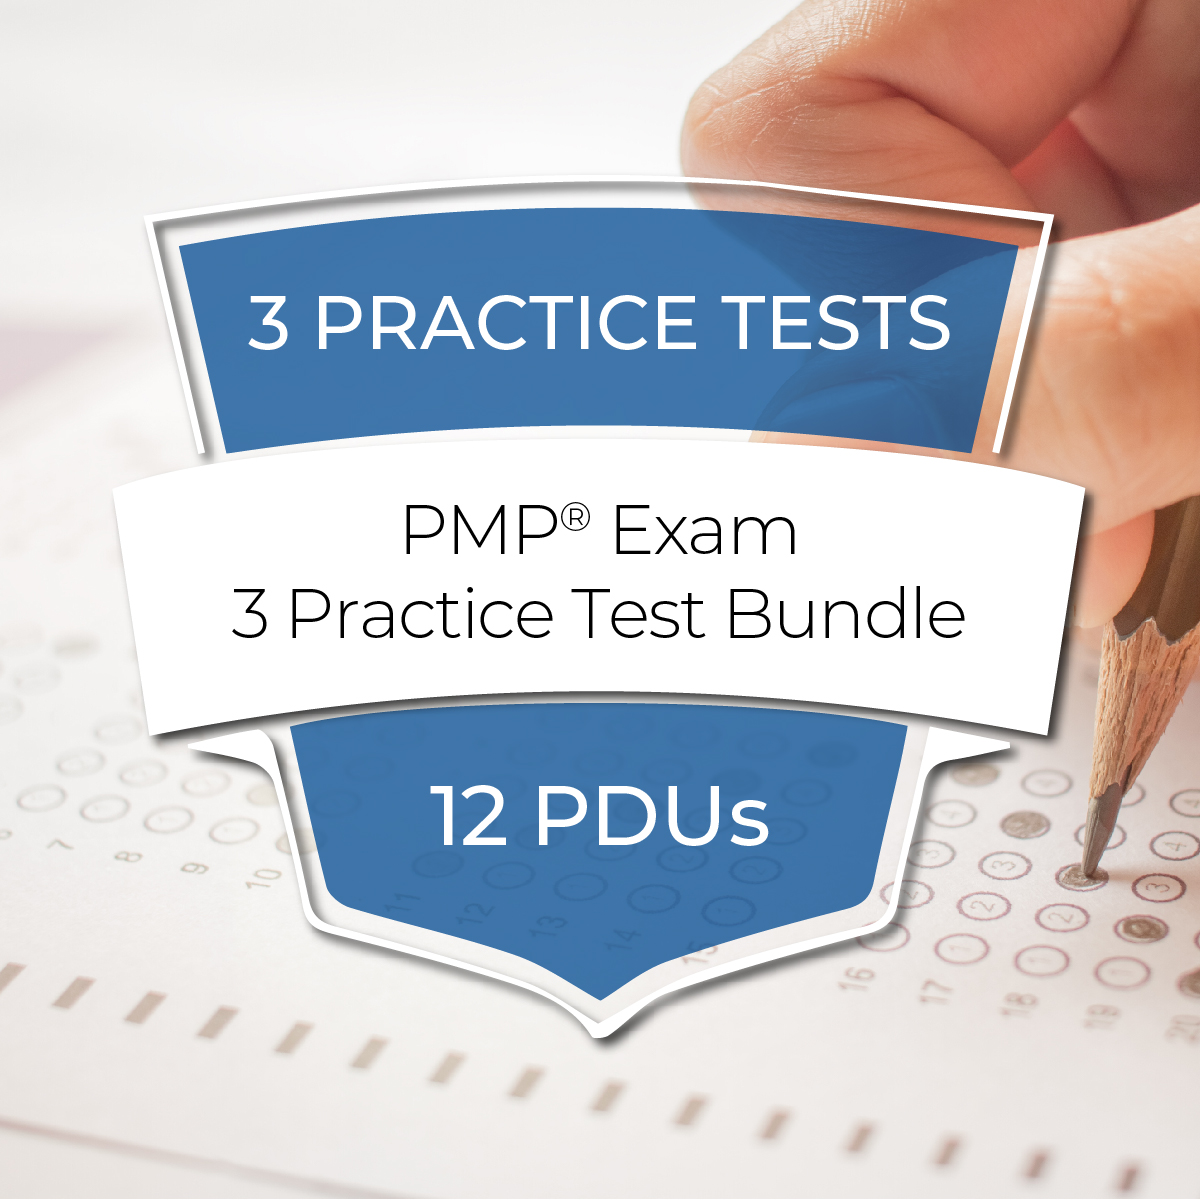 PMP® Exam - 3 Practice Test Bundle - Save 15%